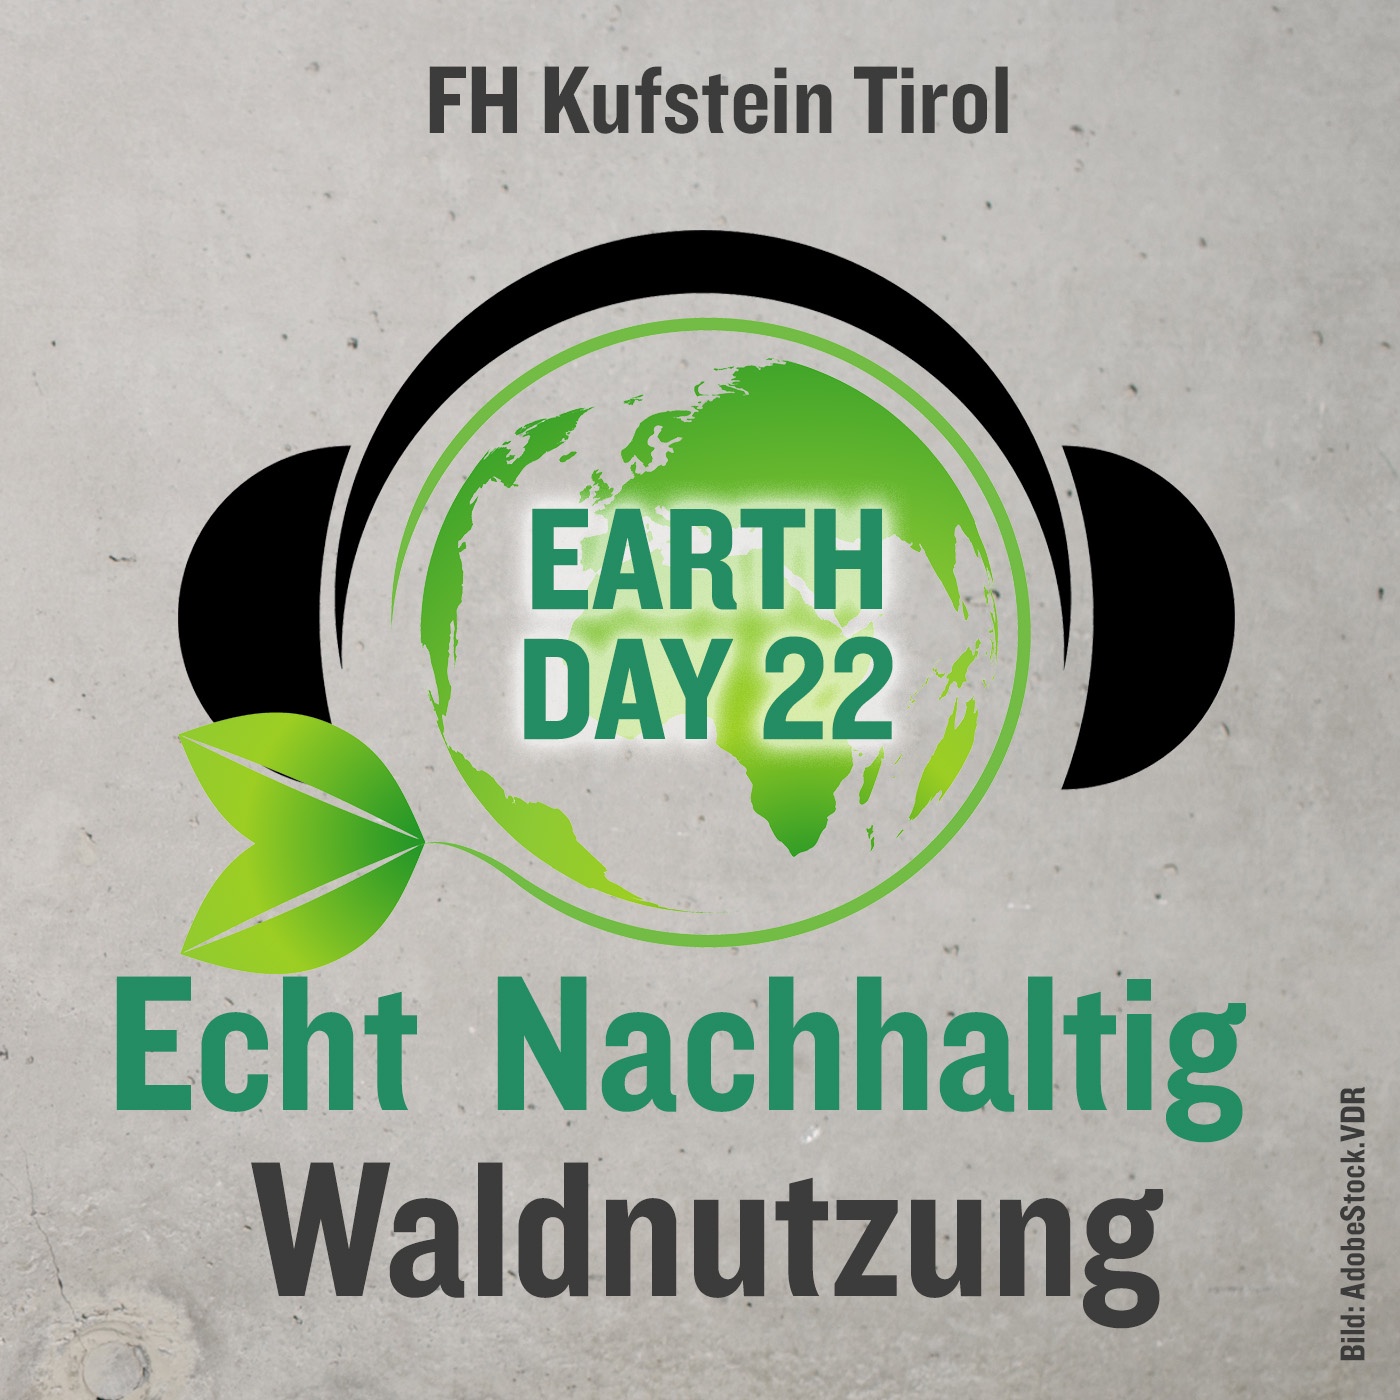 Echt Nachhaltig: EarthDay 22 - Waldnutzung